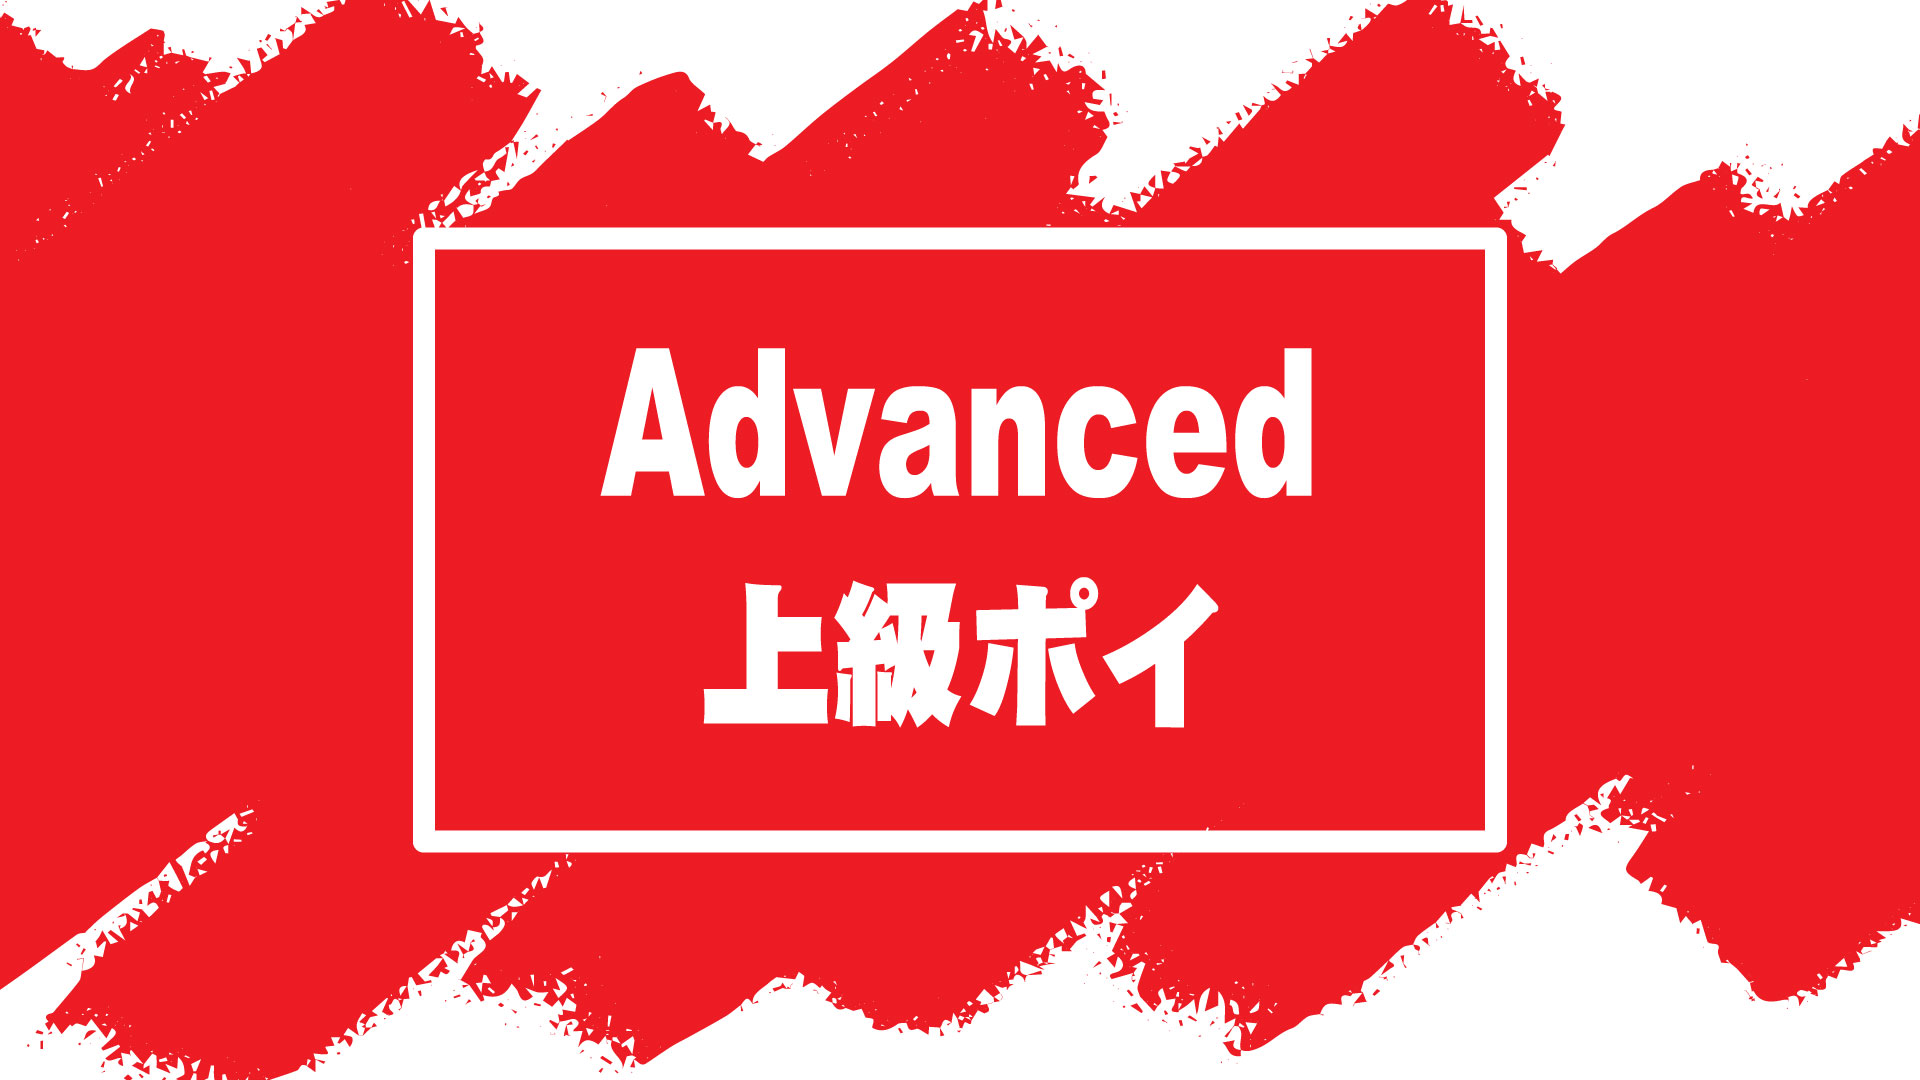 Advanced



